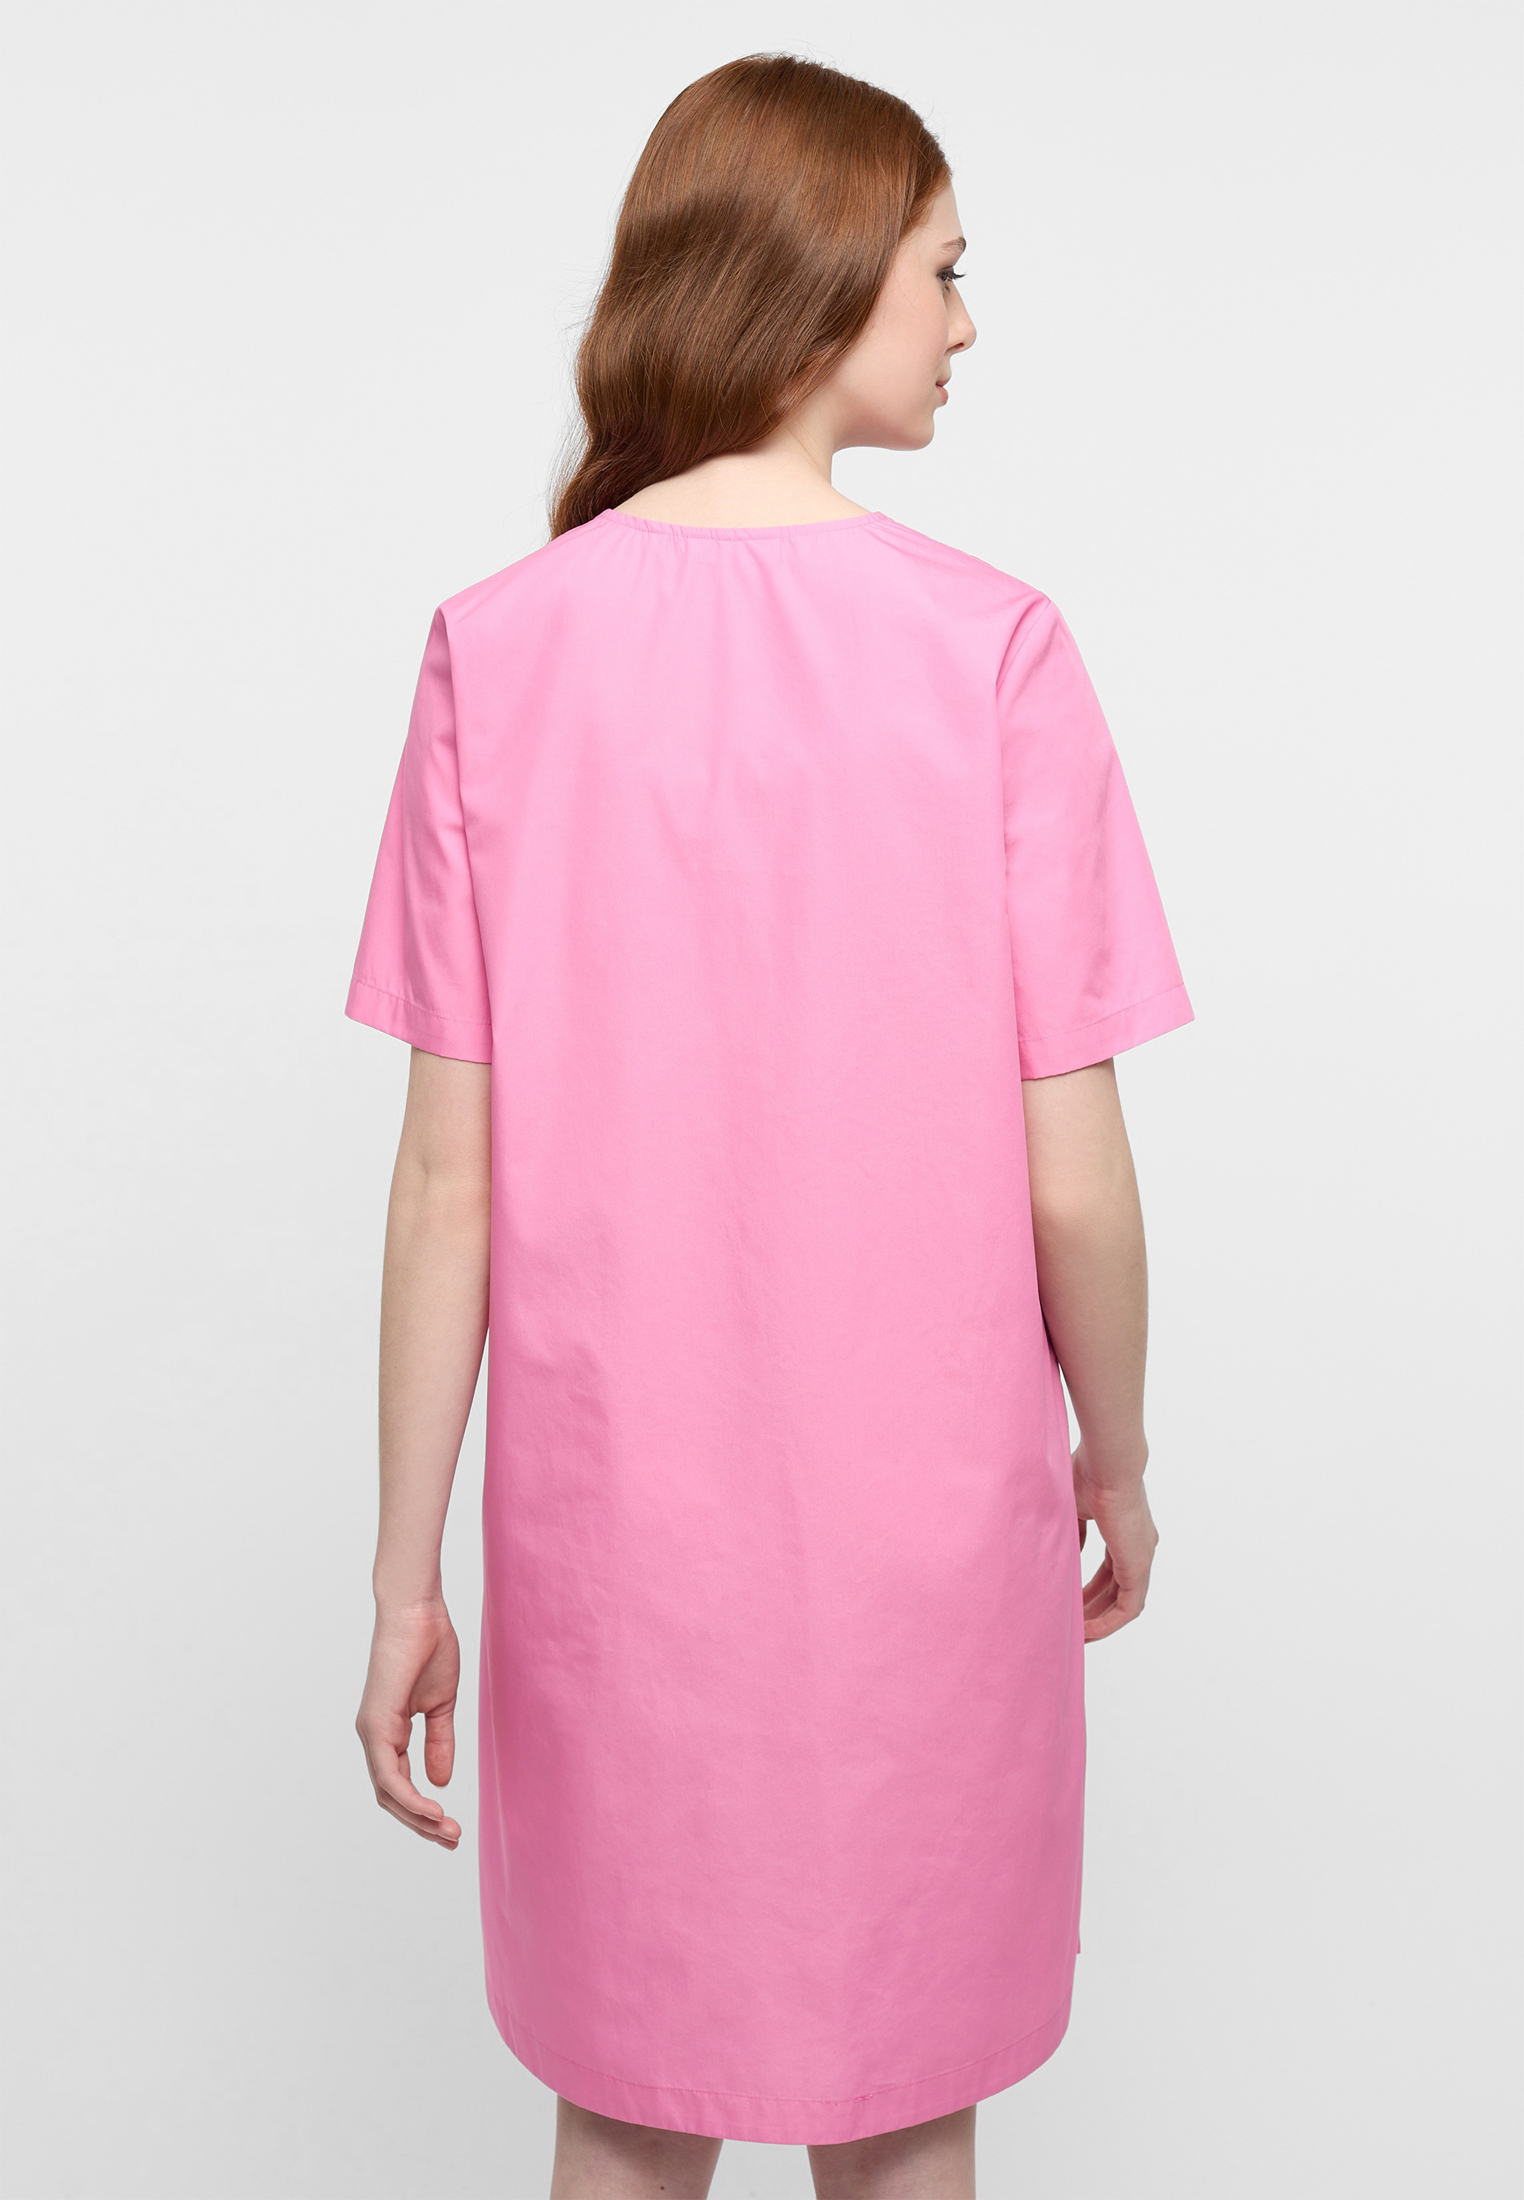 | | dress plain short in | 2DR00211-15-21-34-1/2 sleeve Shirt | pink pink 34